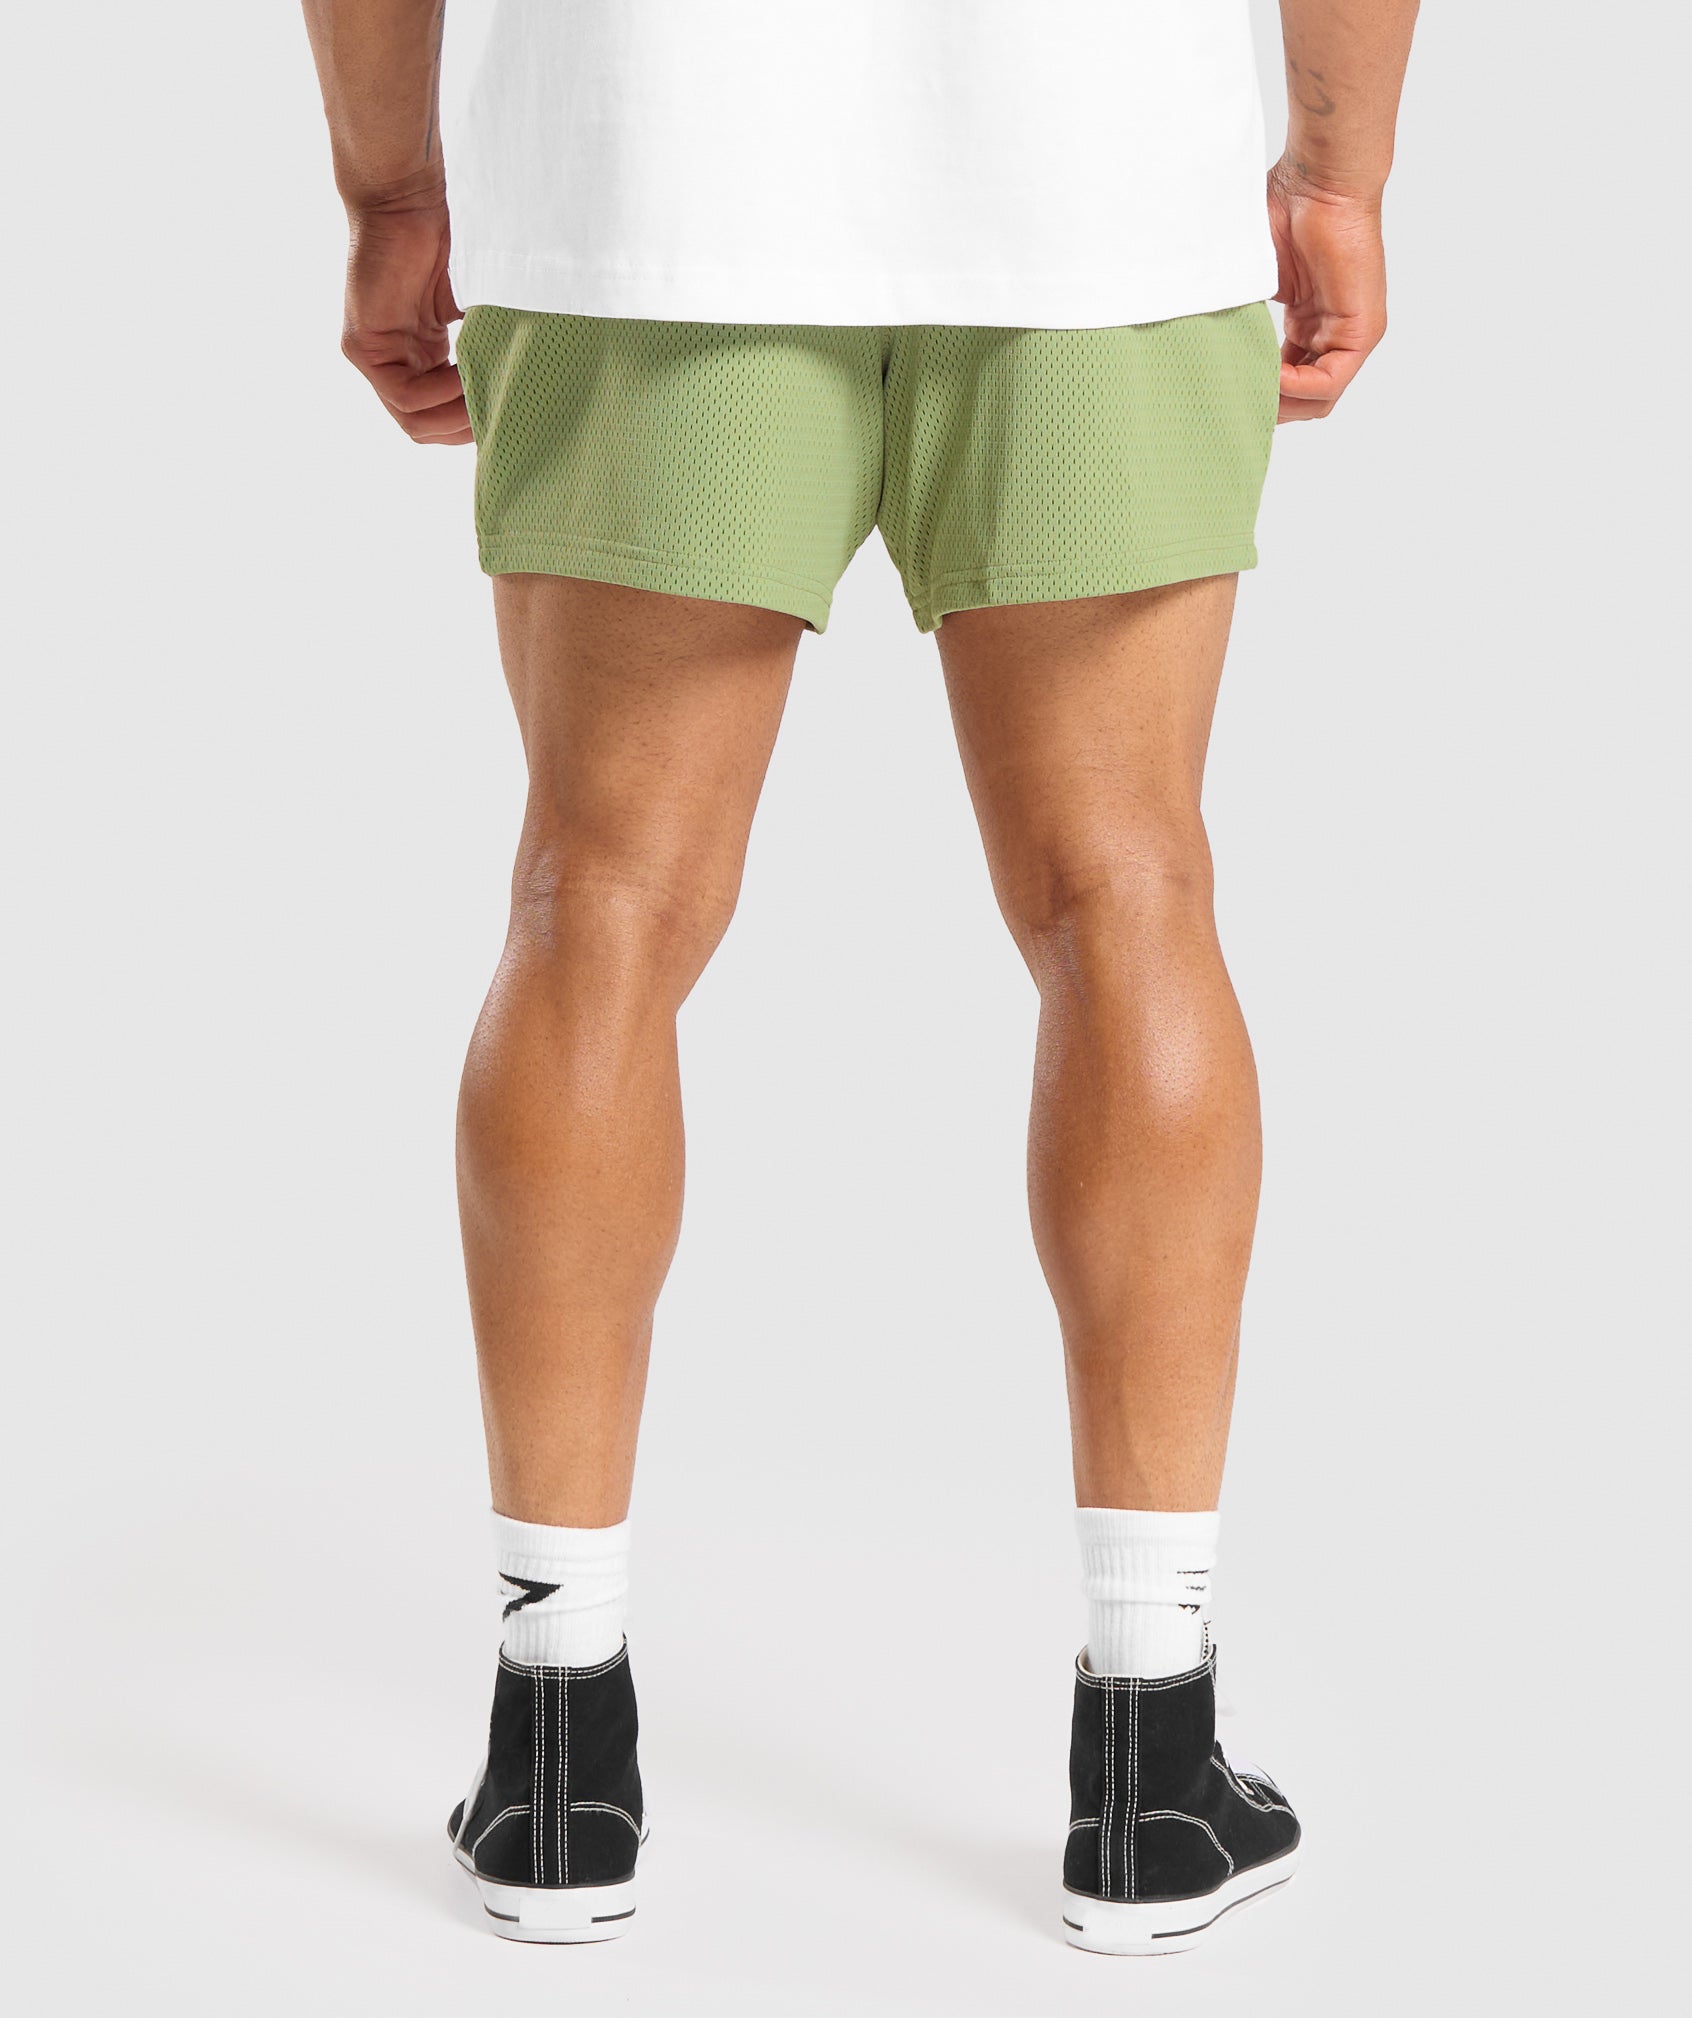 Brandmark Mesh 5" Shorts in Natural Sage Green/Pebble Grey - view 2